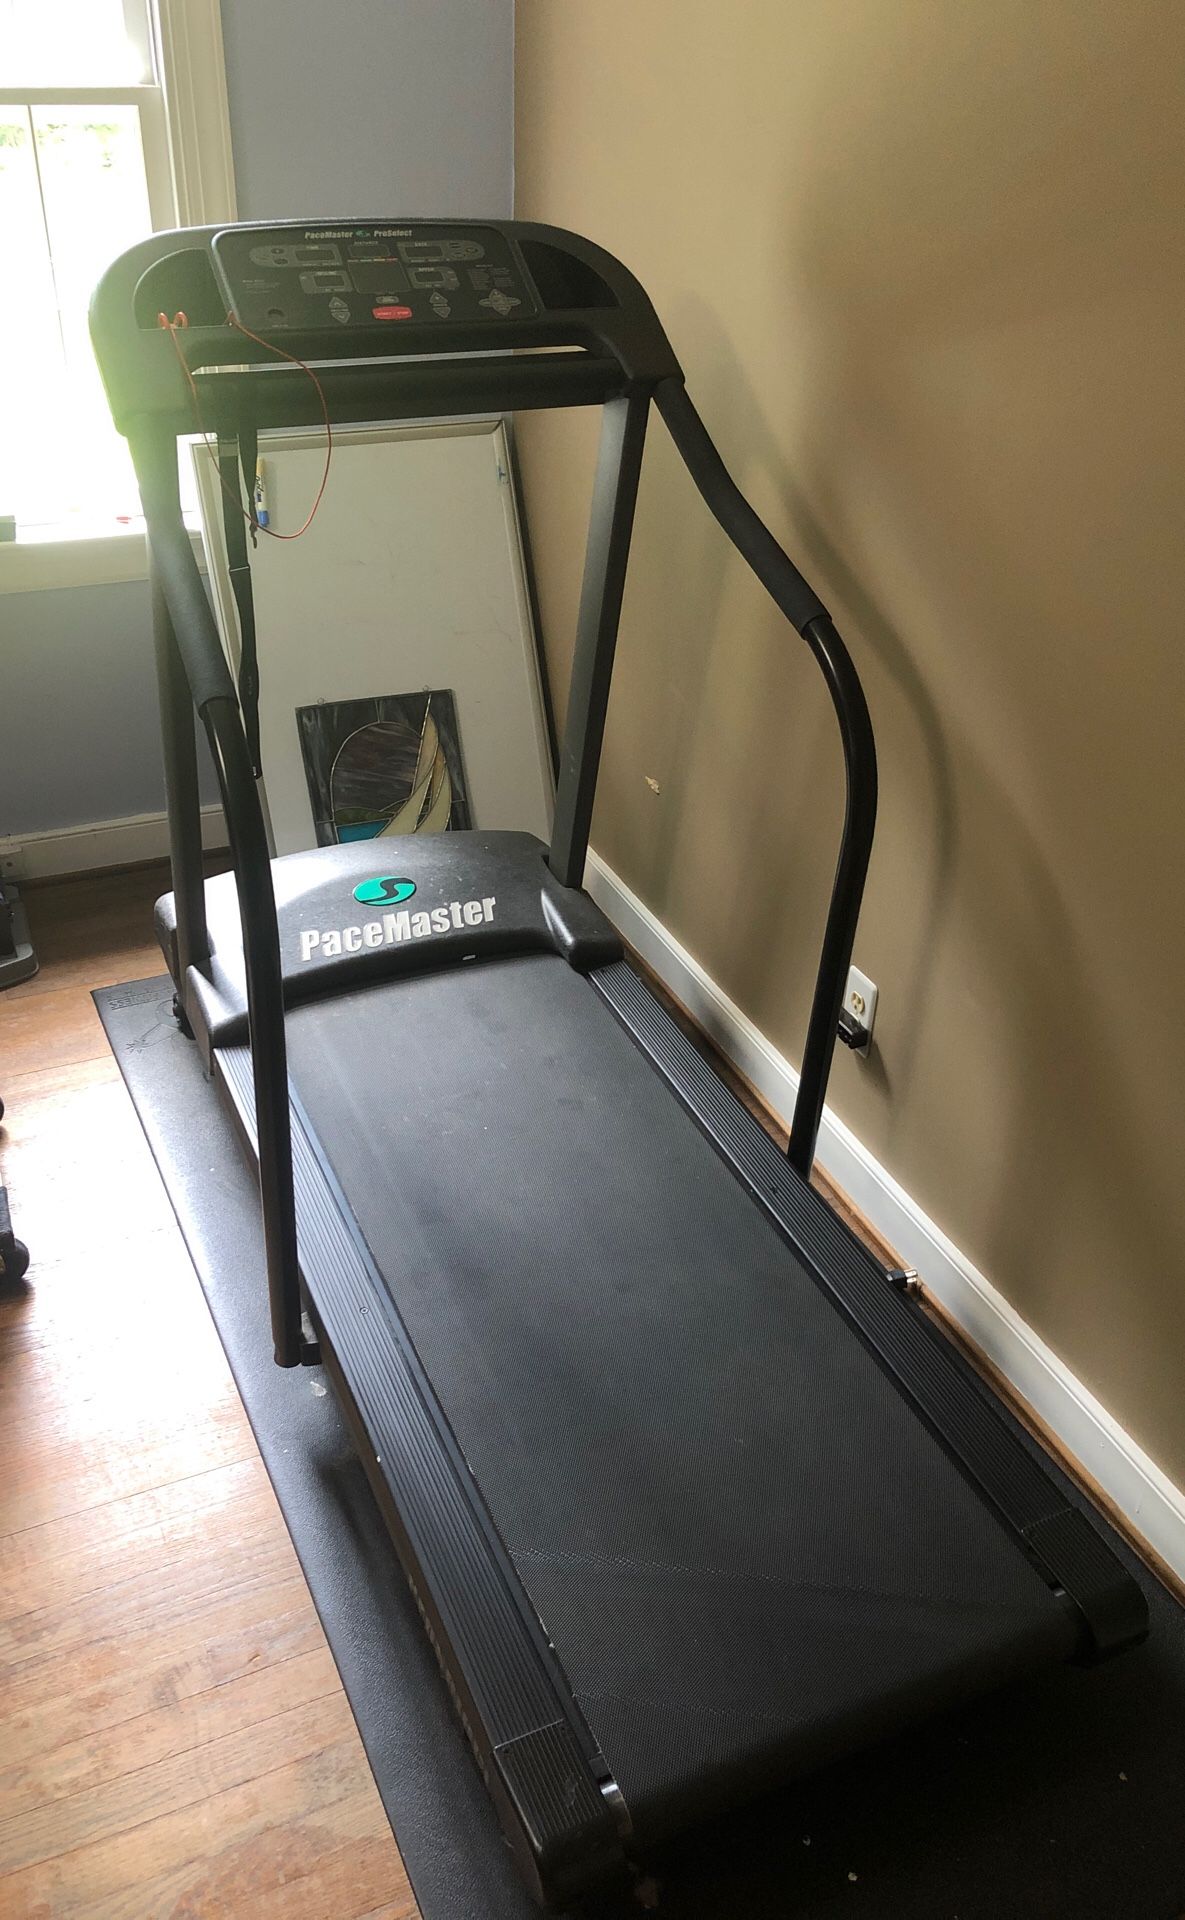 Pace master treadmill